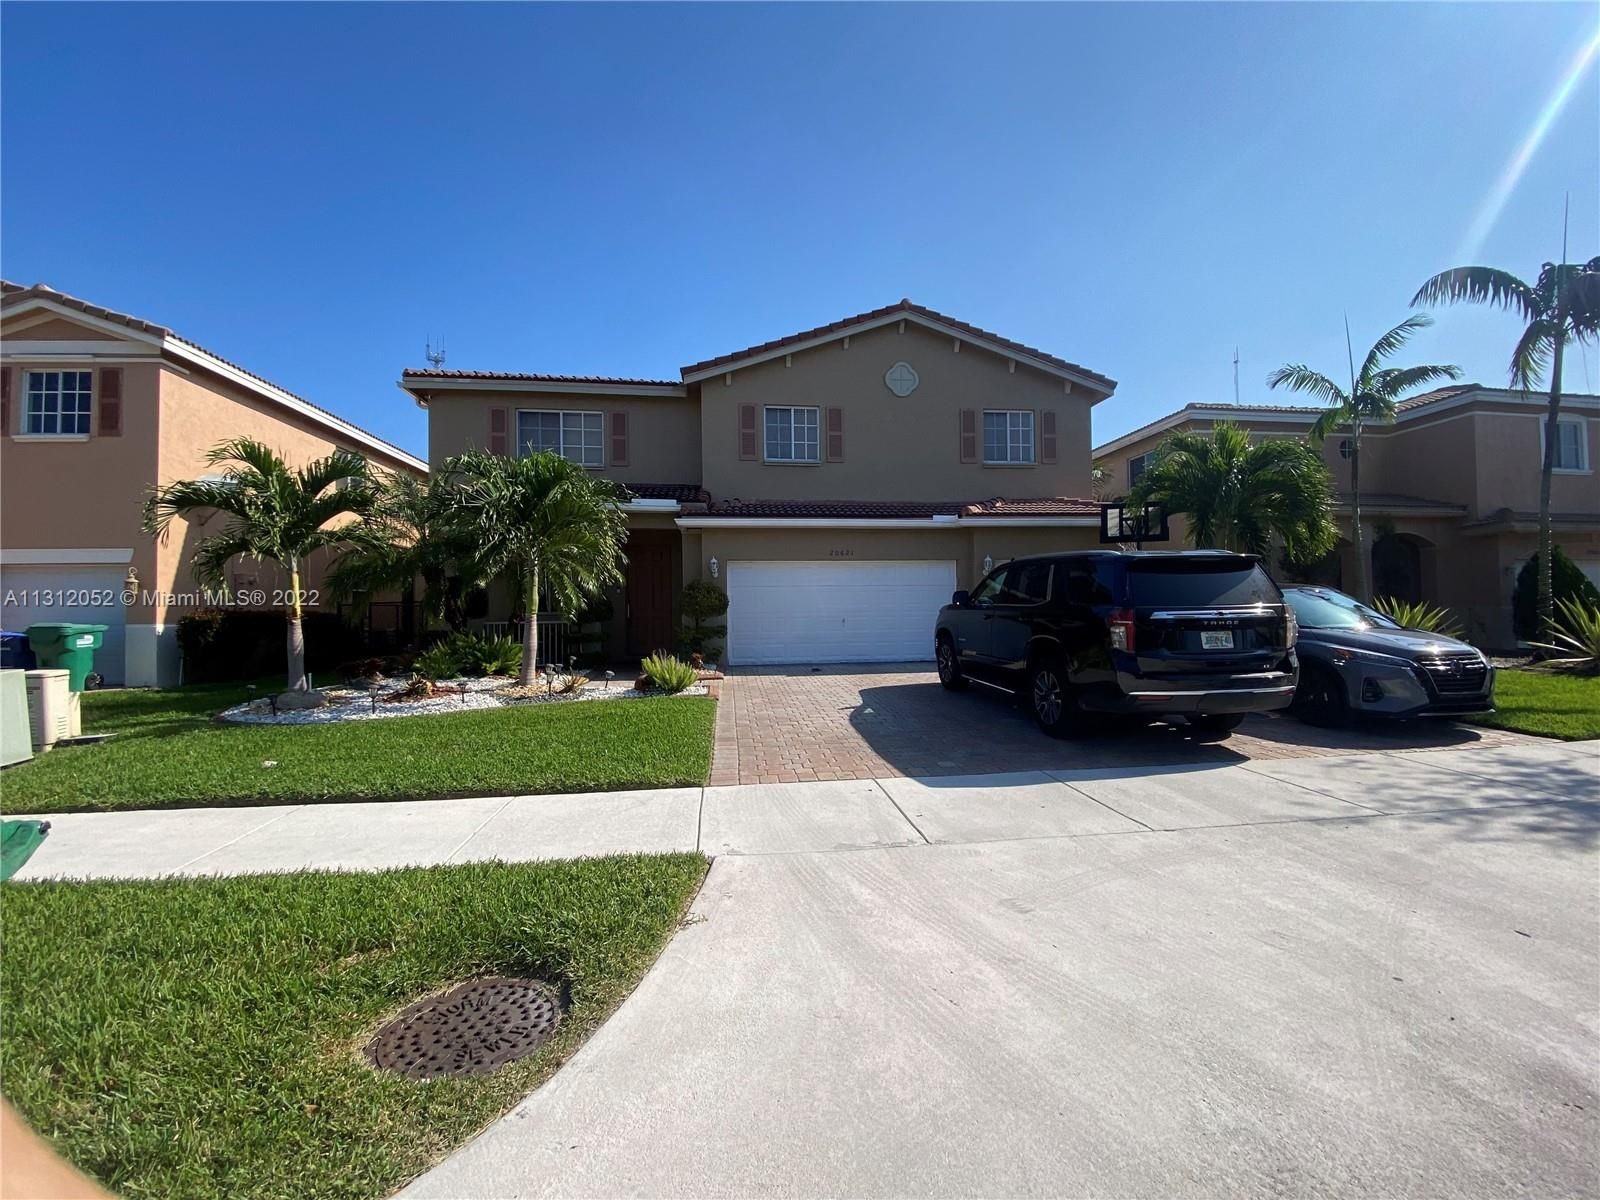 Real estate property located at 20621 10th Ave, Miami-Dade County, Miami Gardens, FL